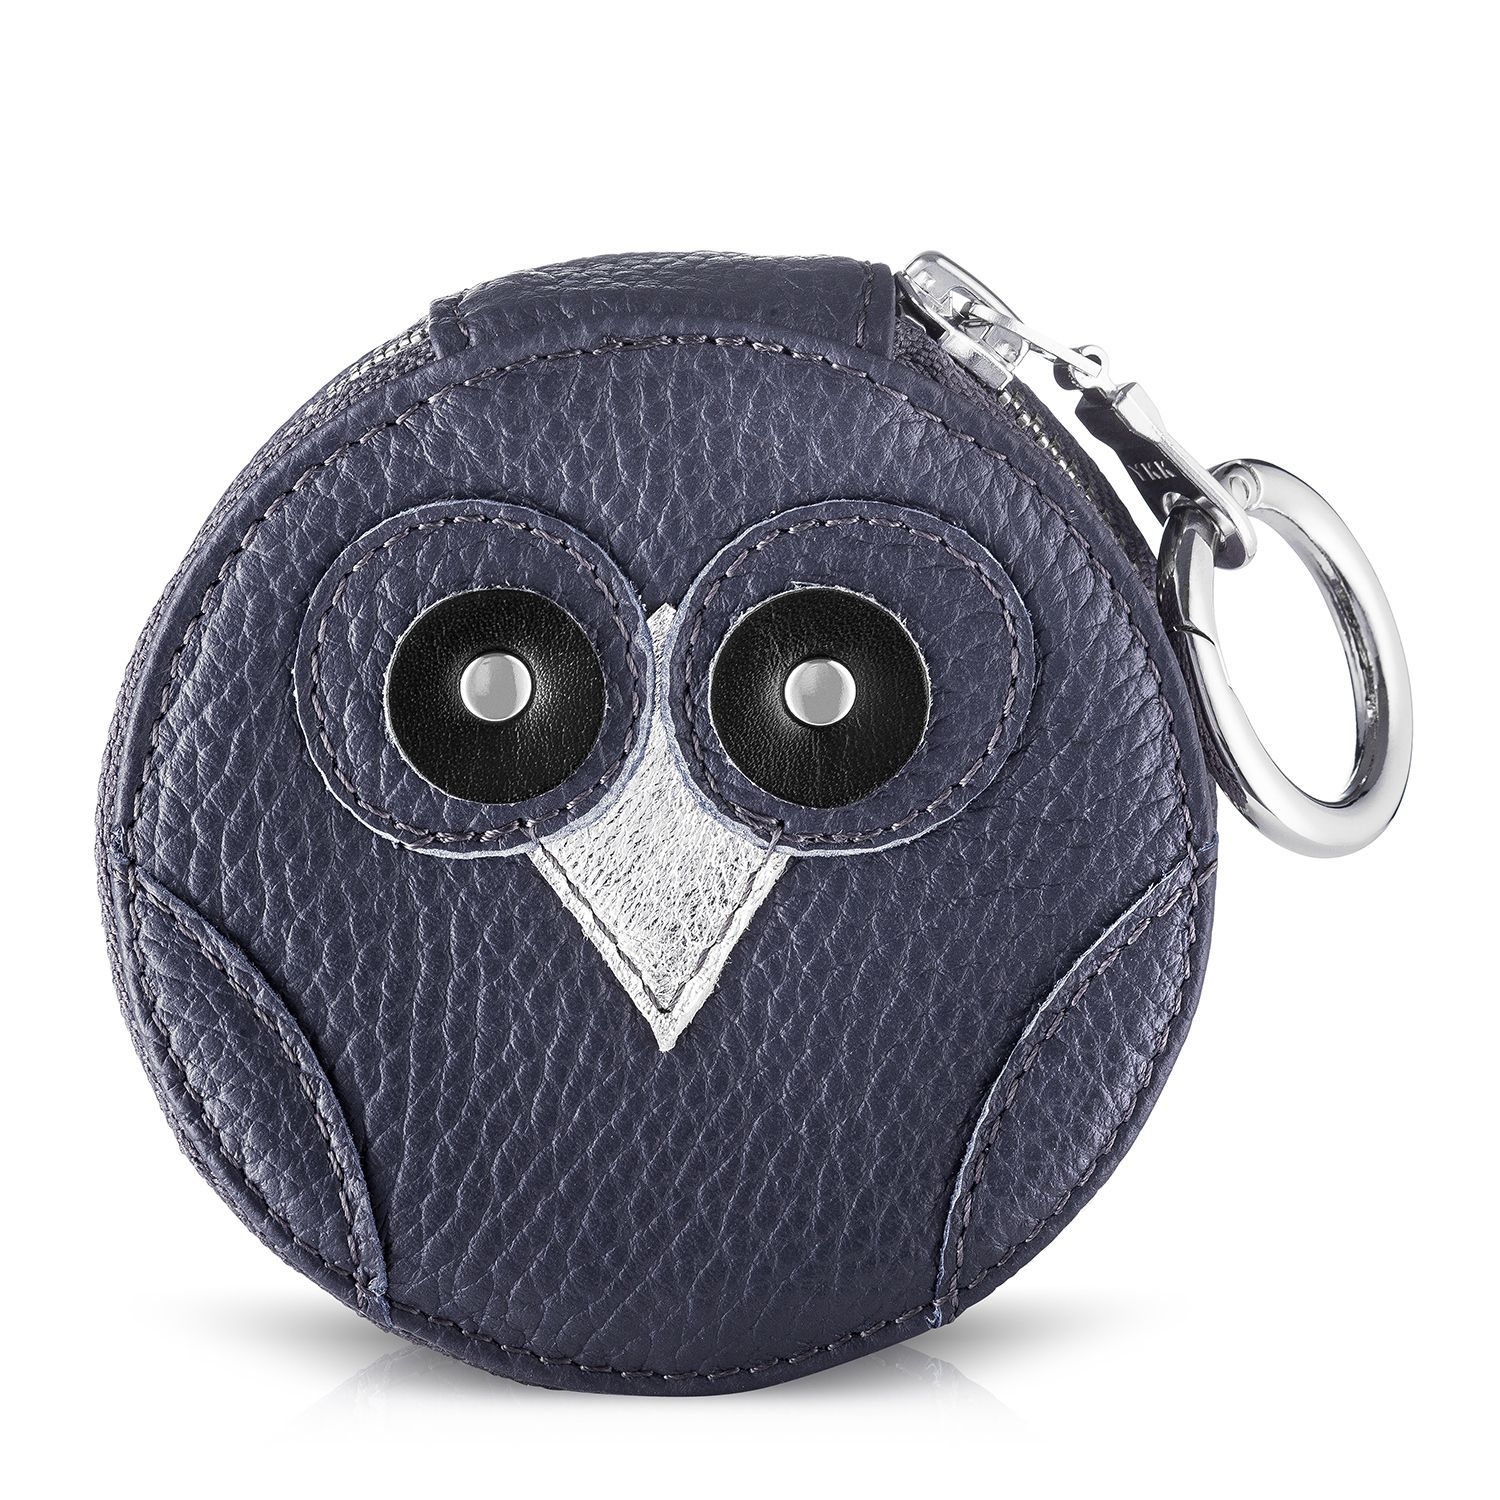 IDA owl purse - navy